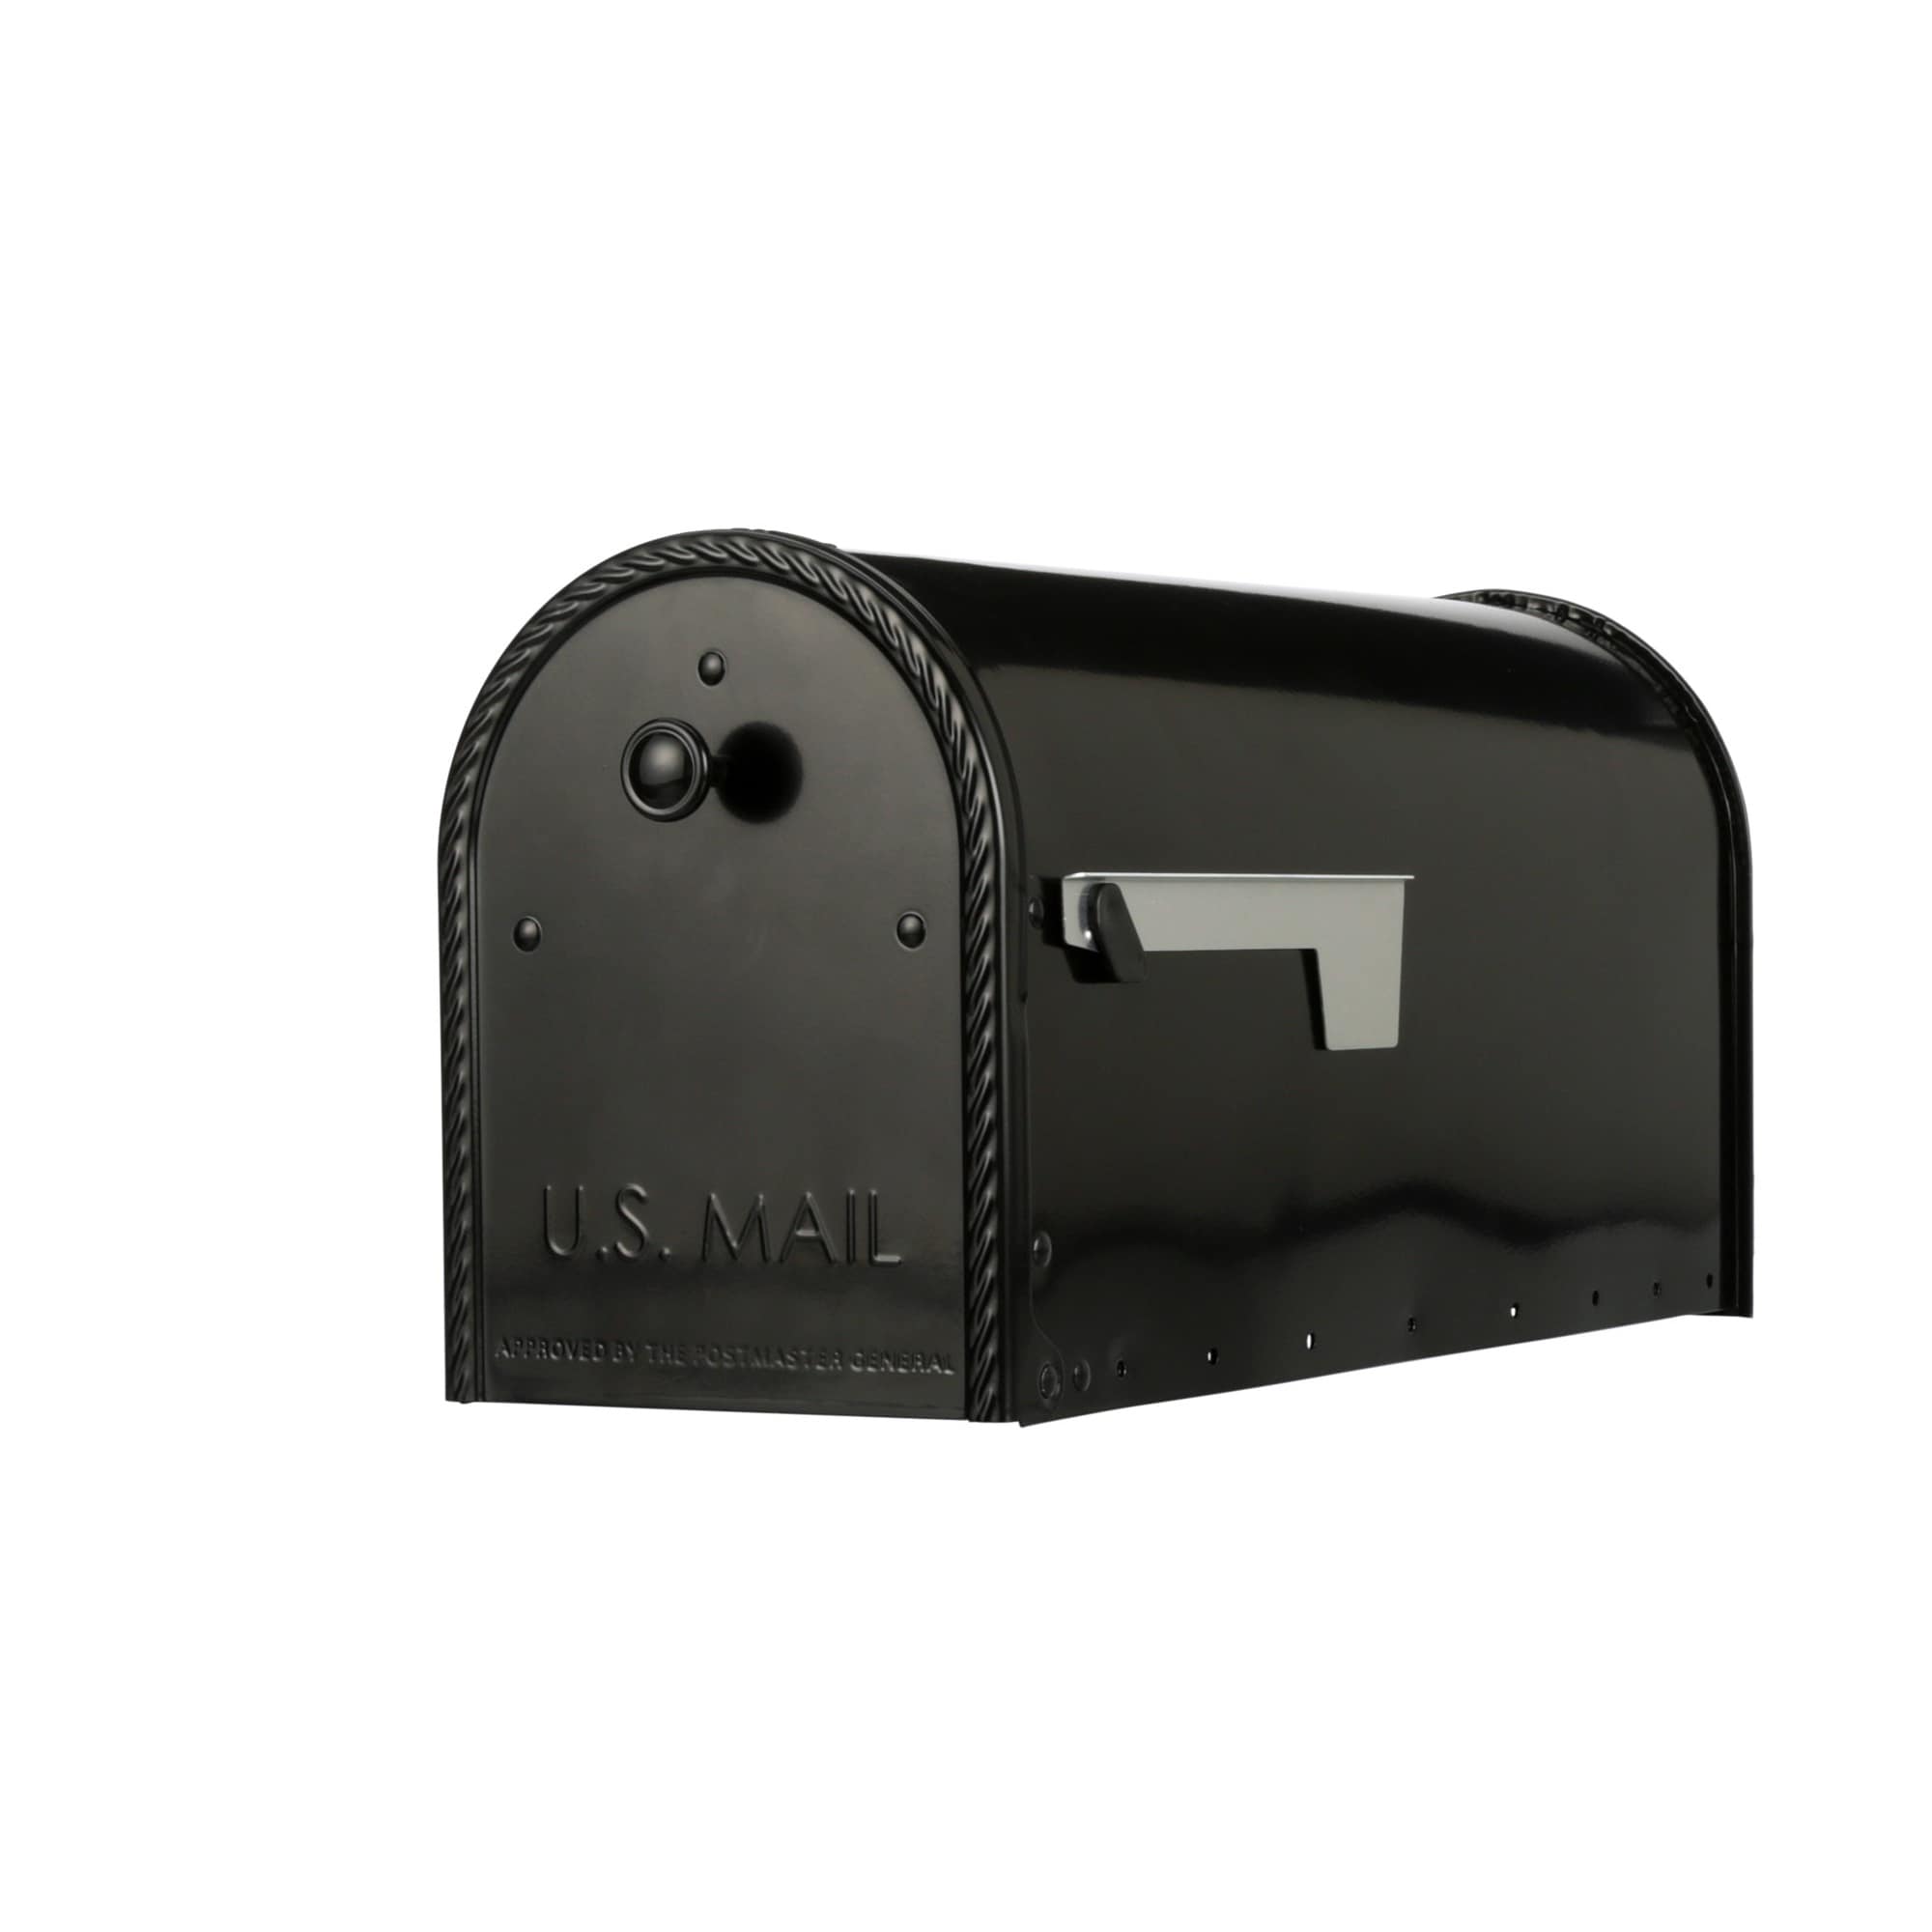 steel city mailbox parts